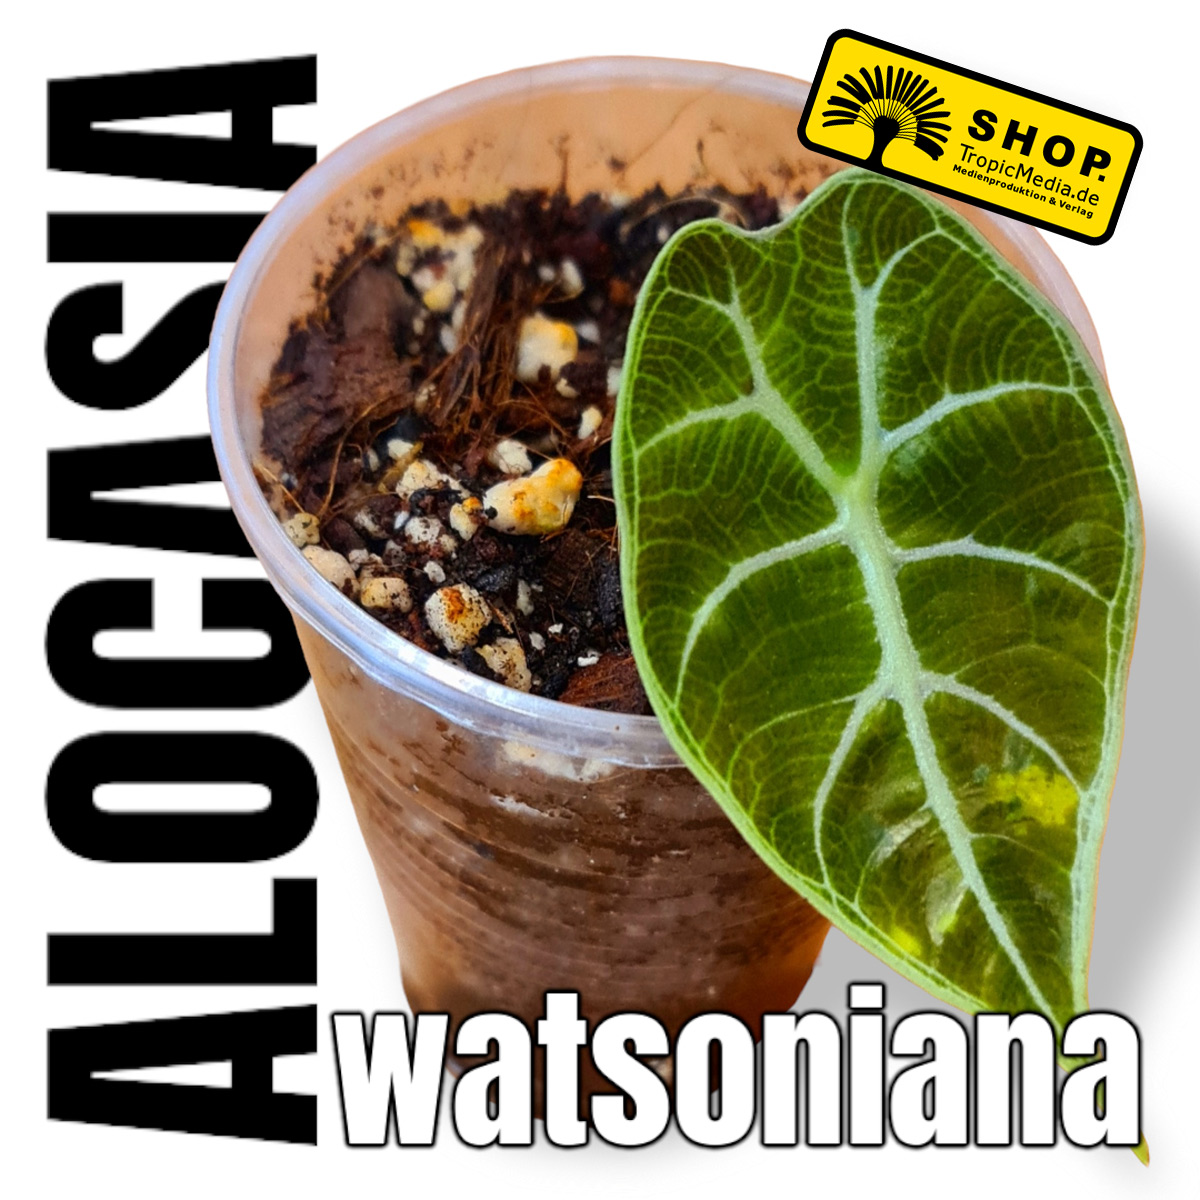 Alocasia longiloba aka watsoniana